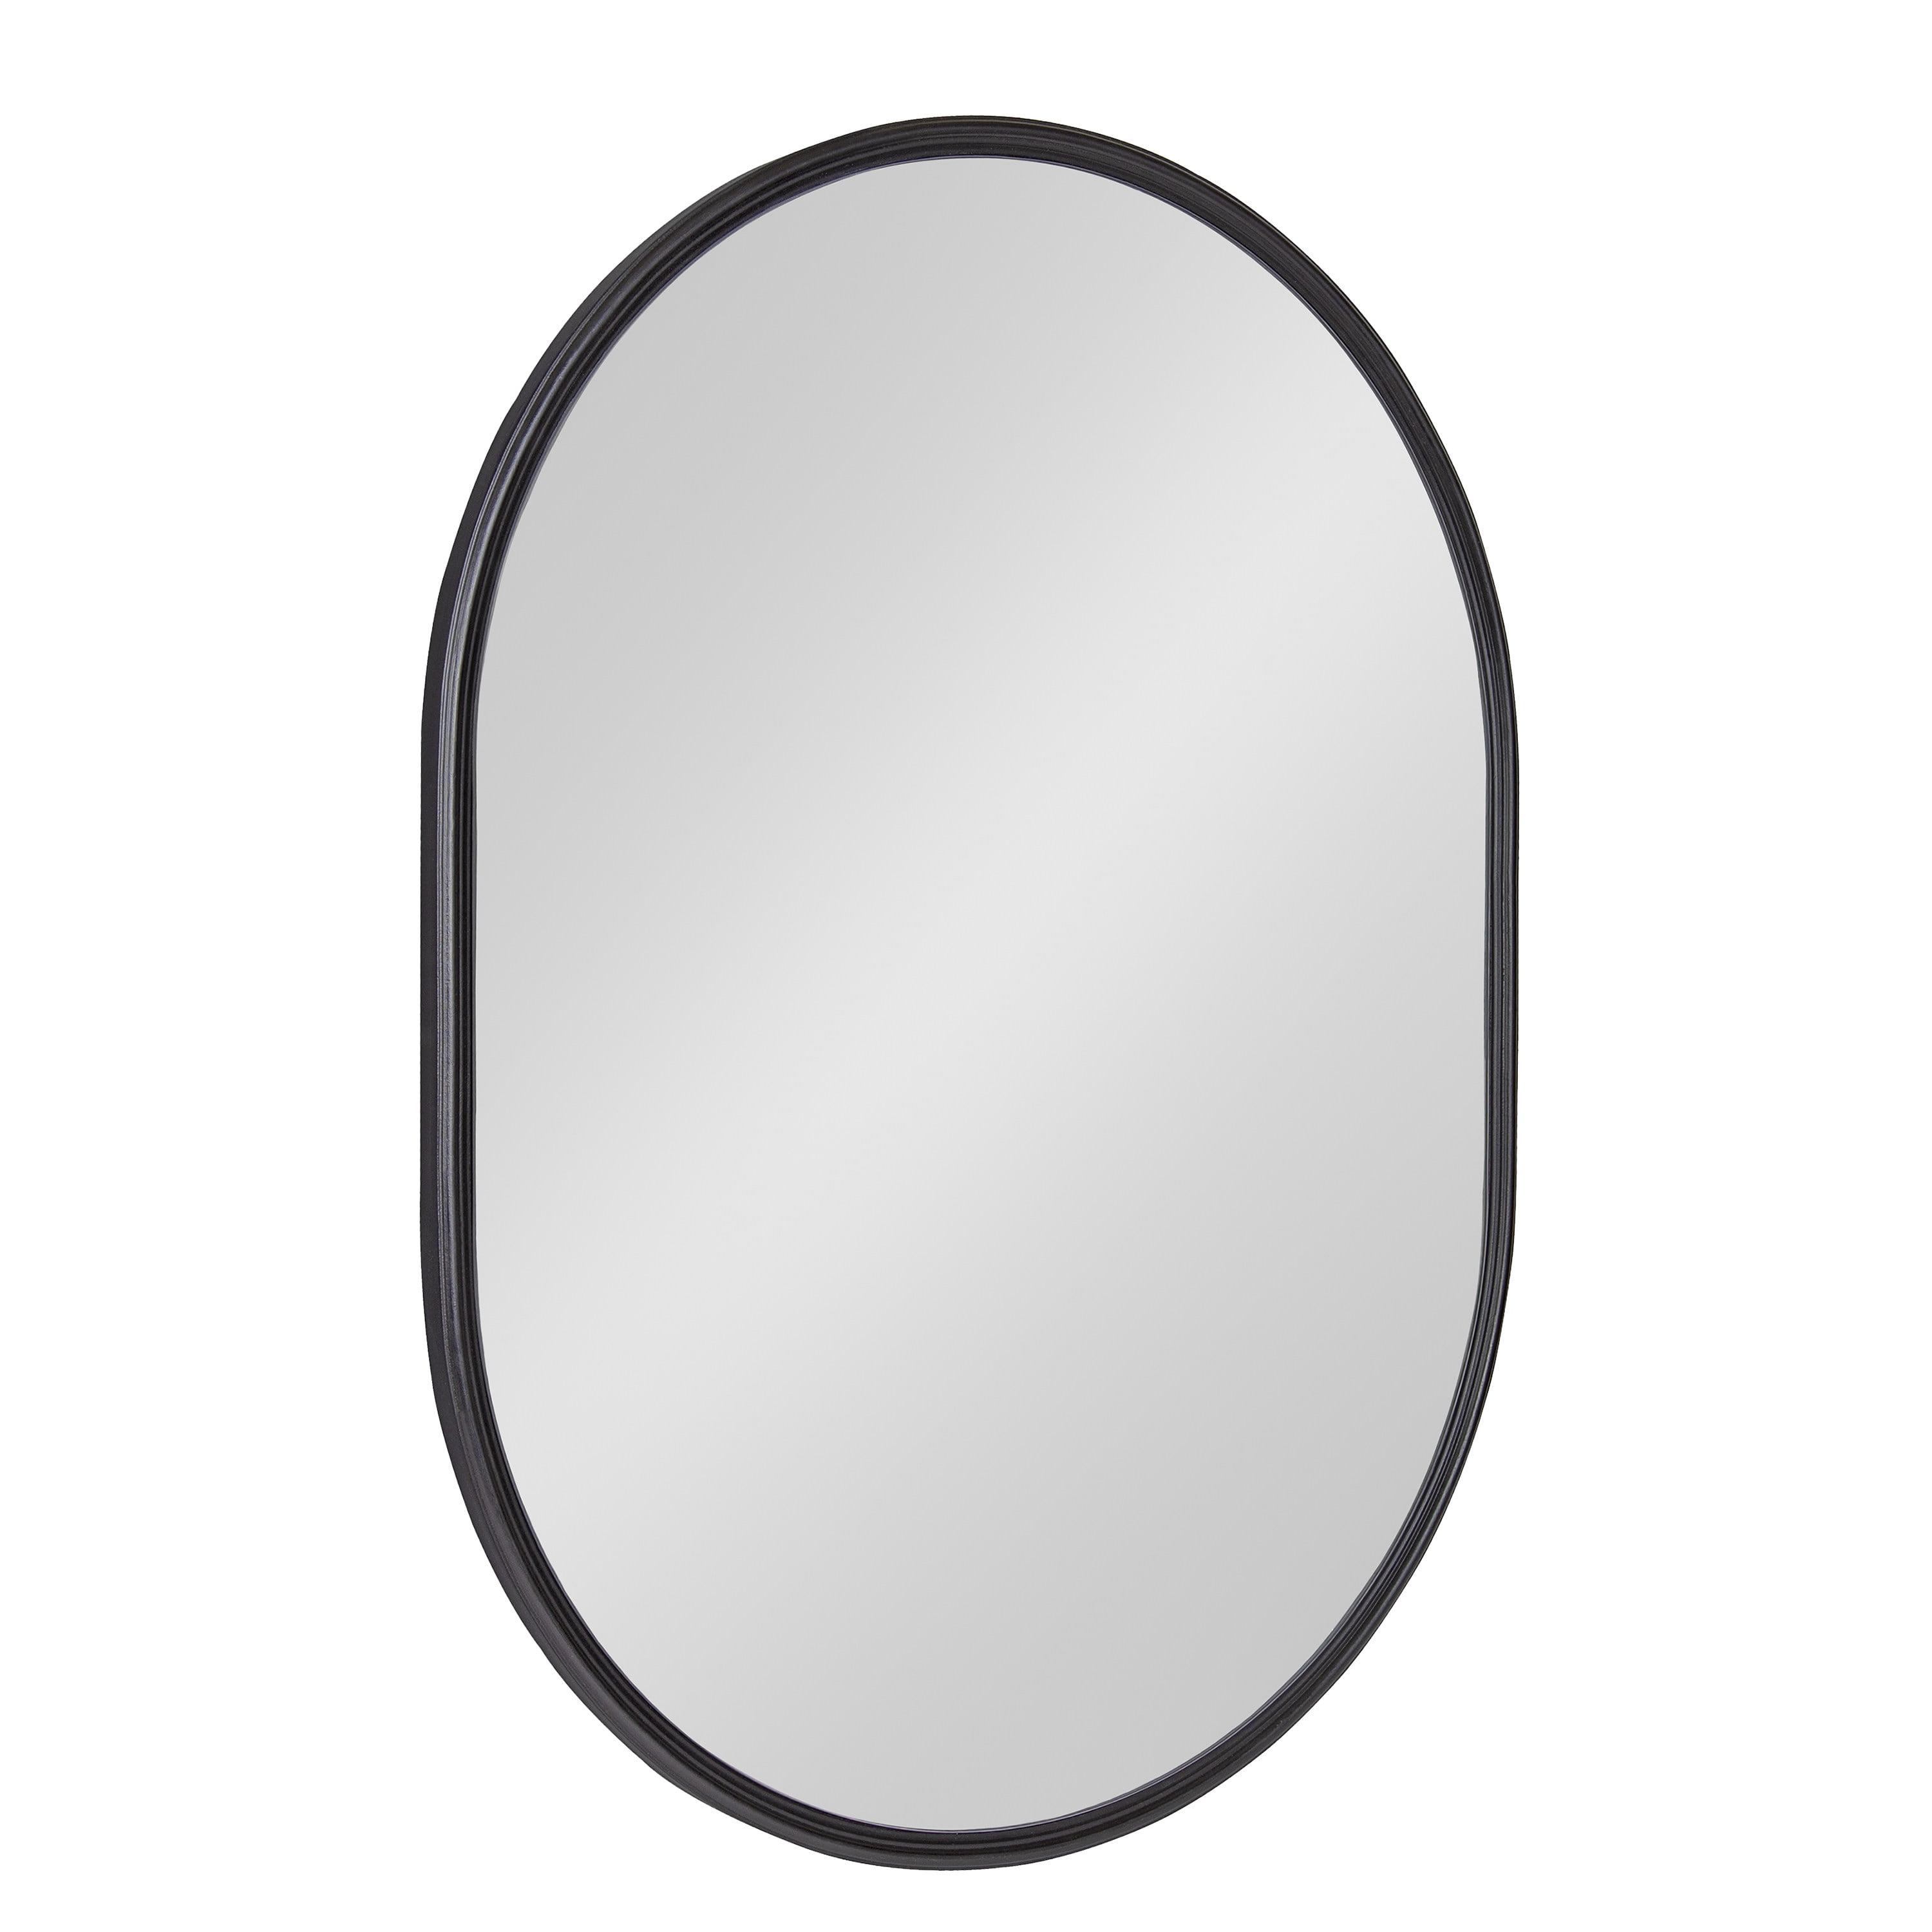 Elegant Full-Length Oval Vanity Mirror in Sleek Black Finish